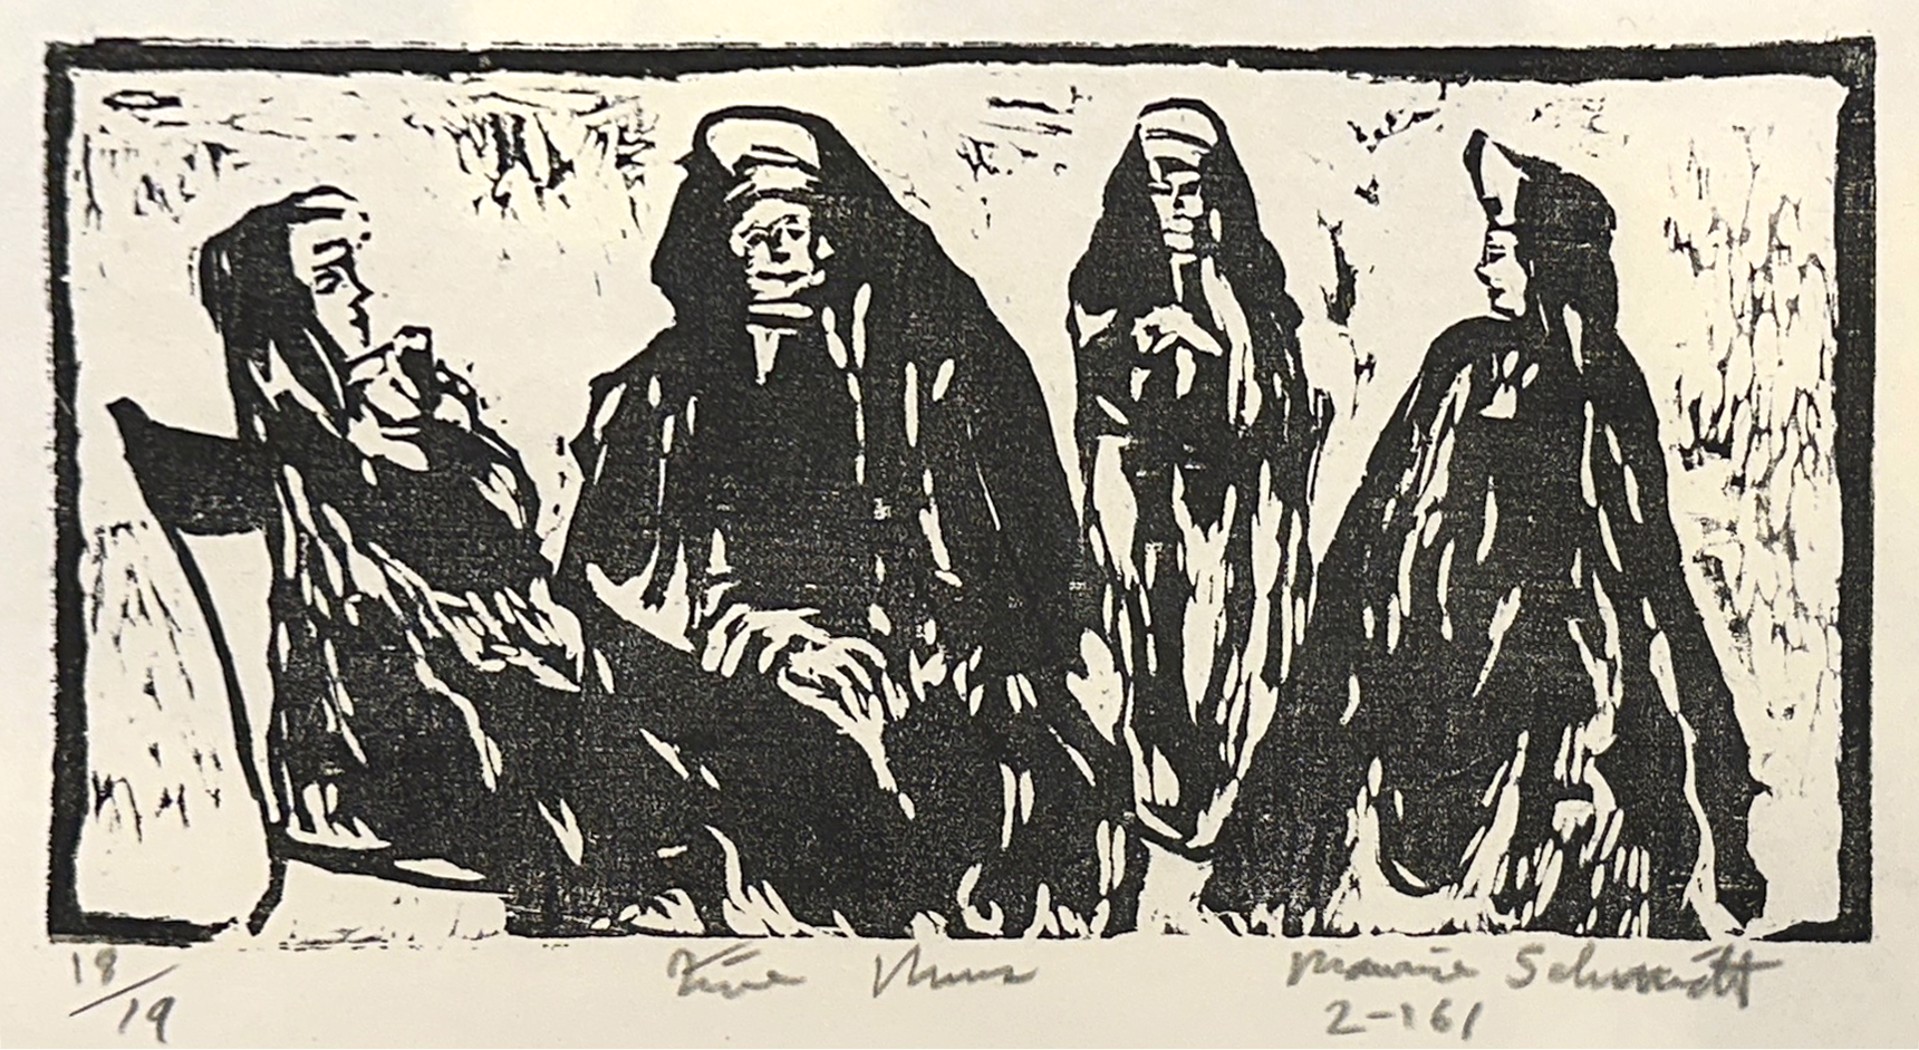 Five Nuns by Maurice Schmidt